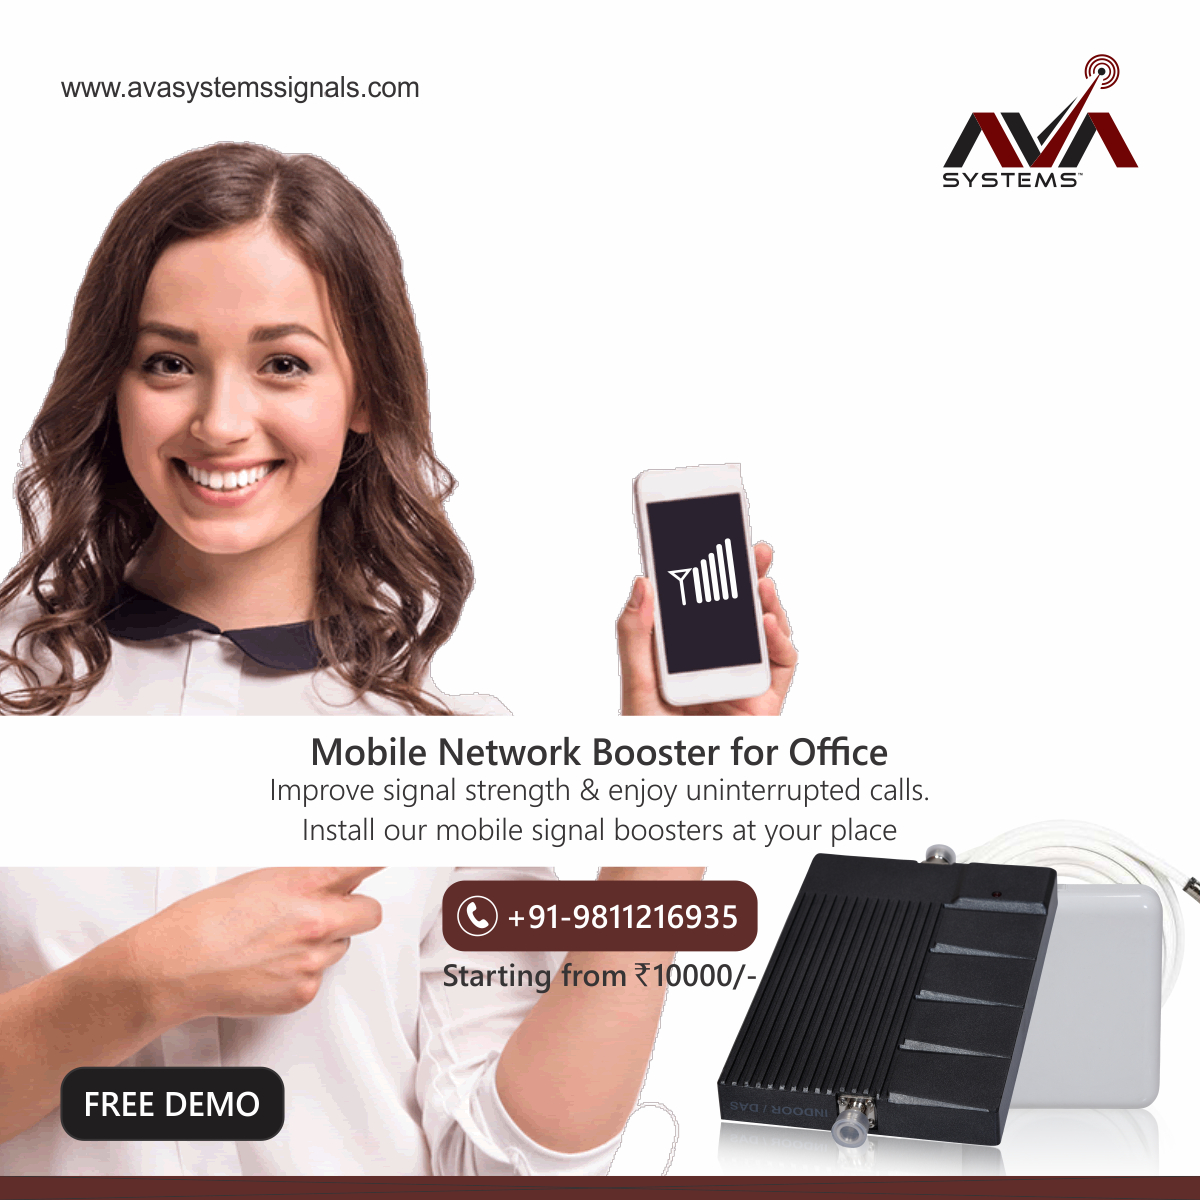 2G 3G CDMA GSM Mobile Phone Network Signal Boosters Delhi